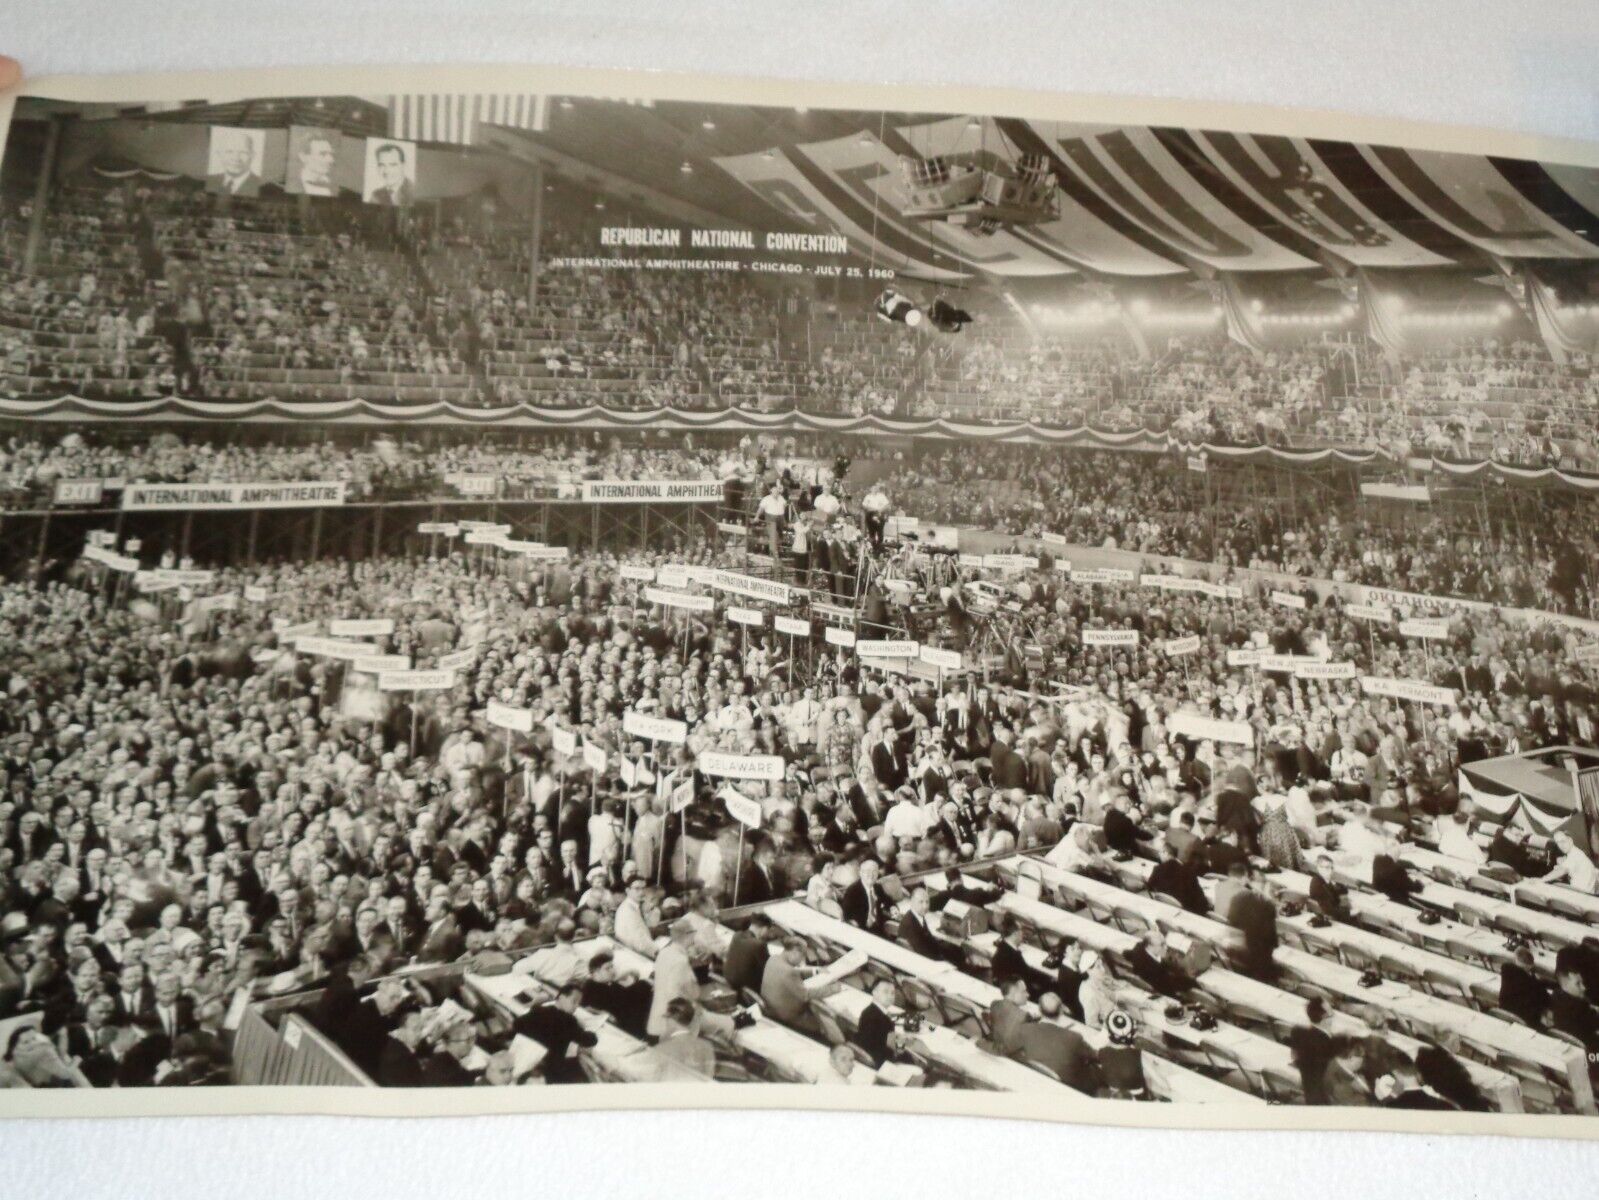 Republican National Convention 1960 Chicago Amphitheatre Rare Incredible Photo